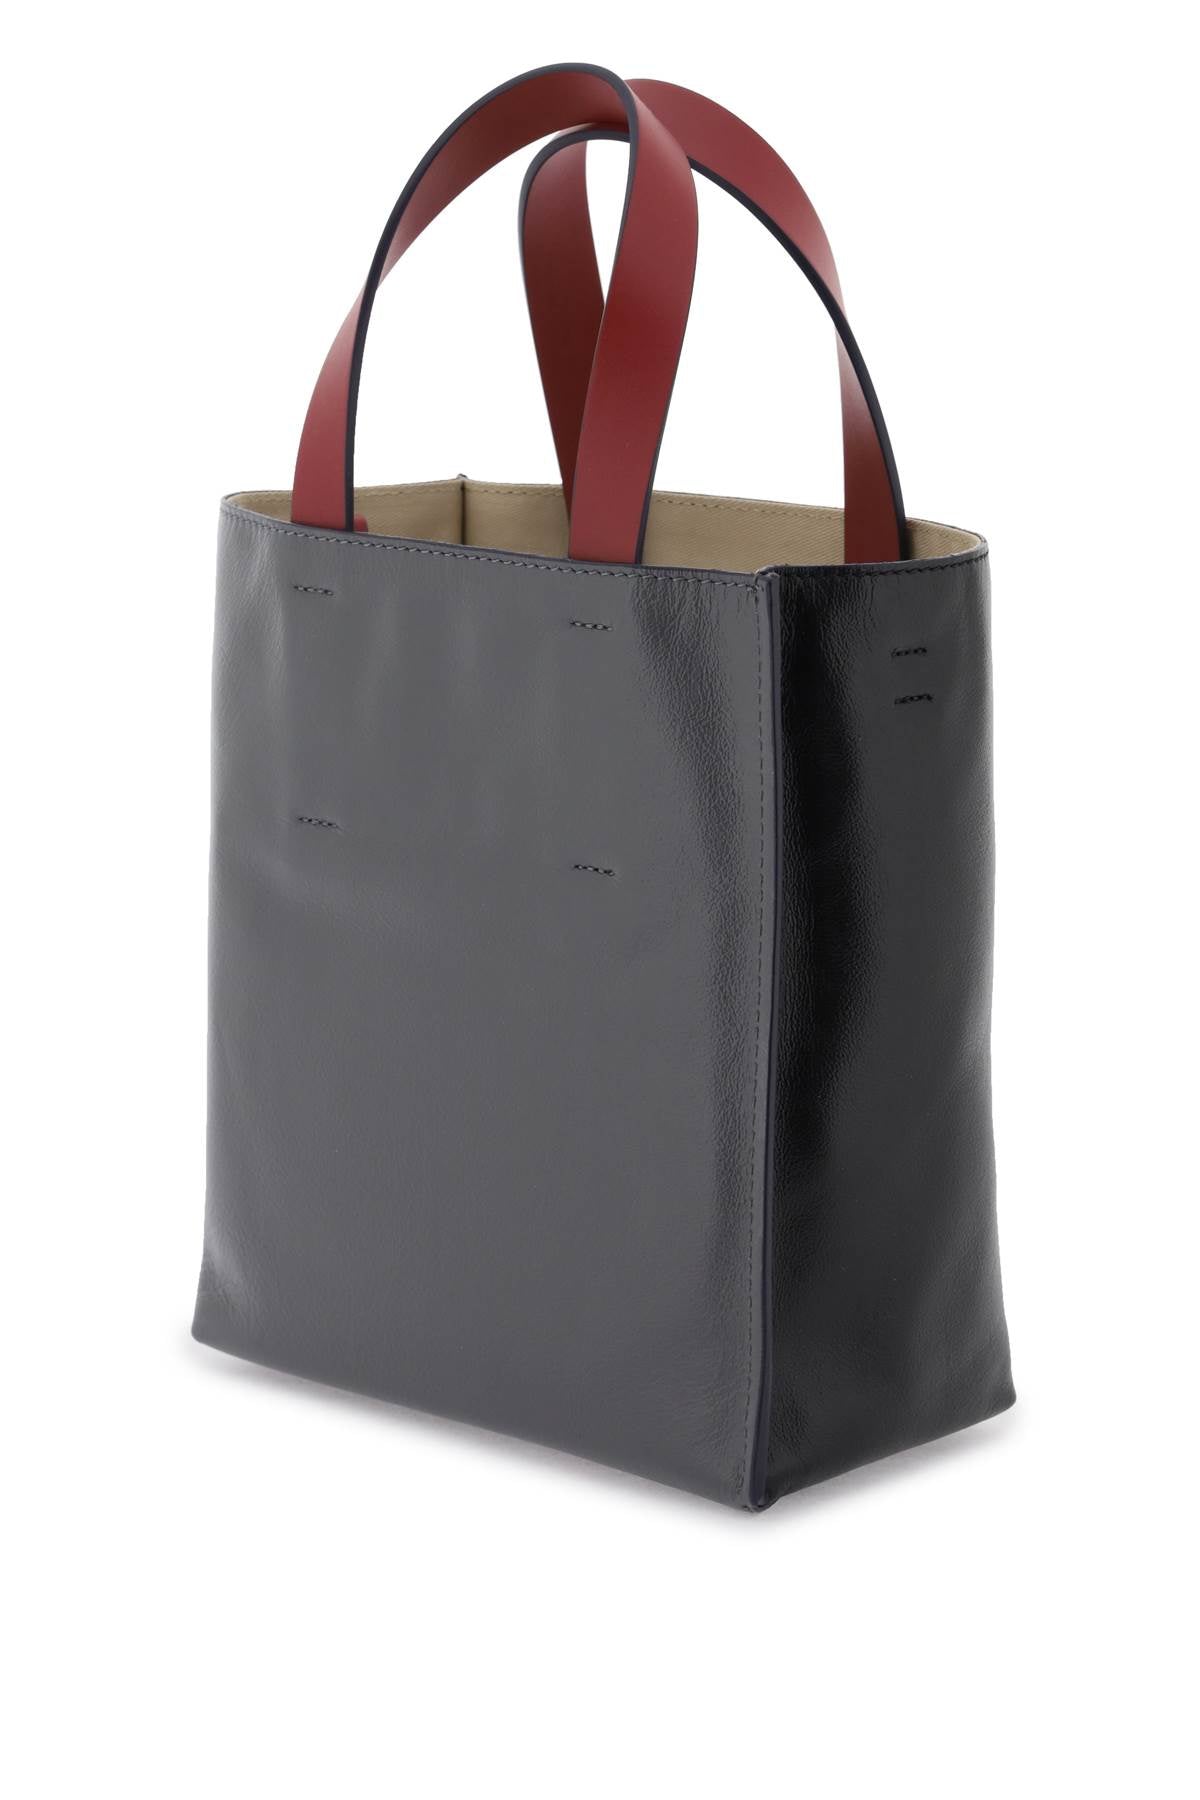 Túi xách bằng da hai màu cho phụ nữ - FW23